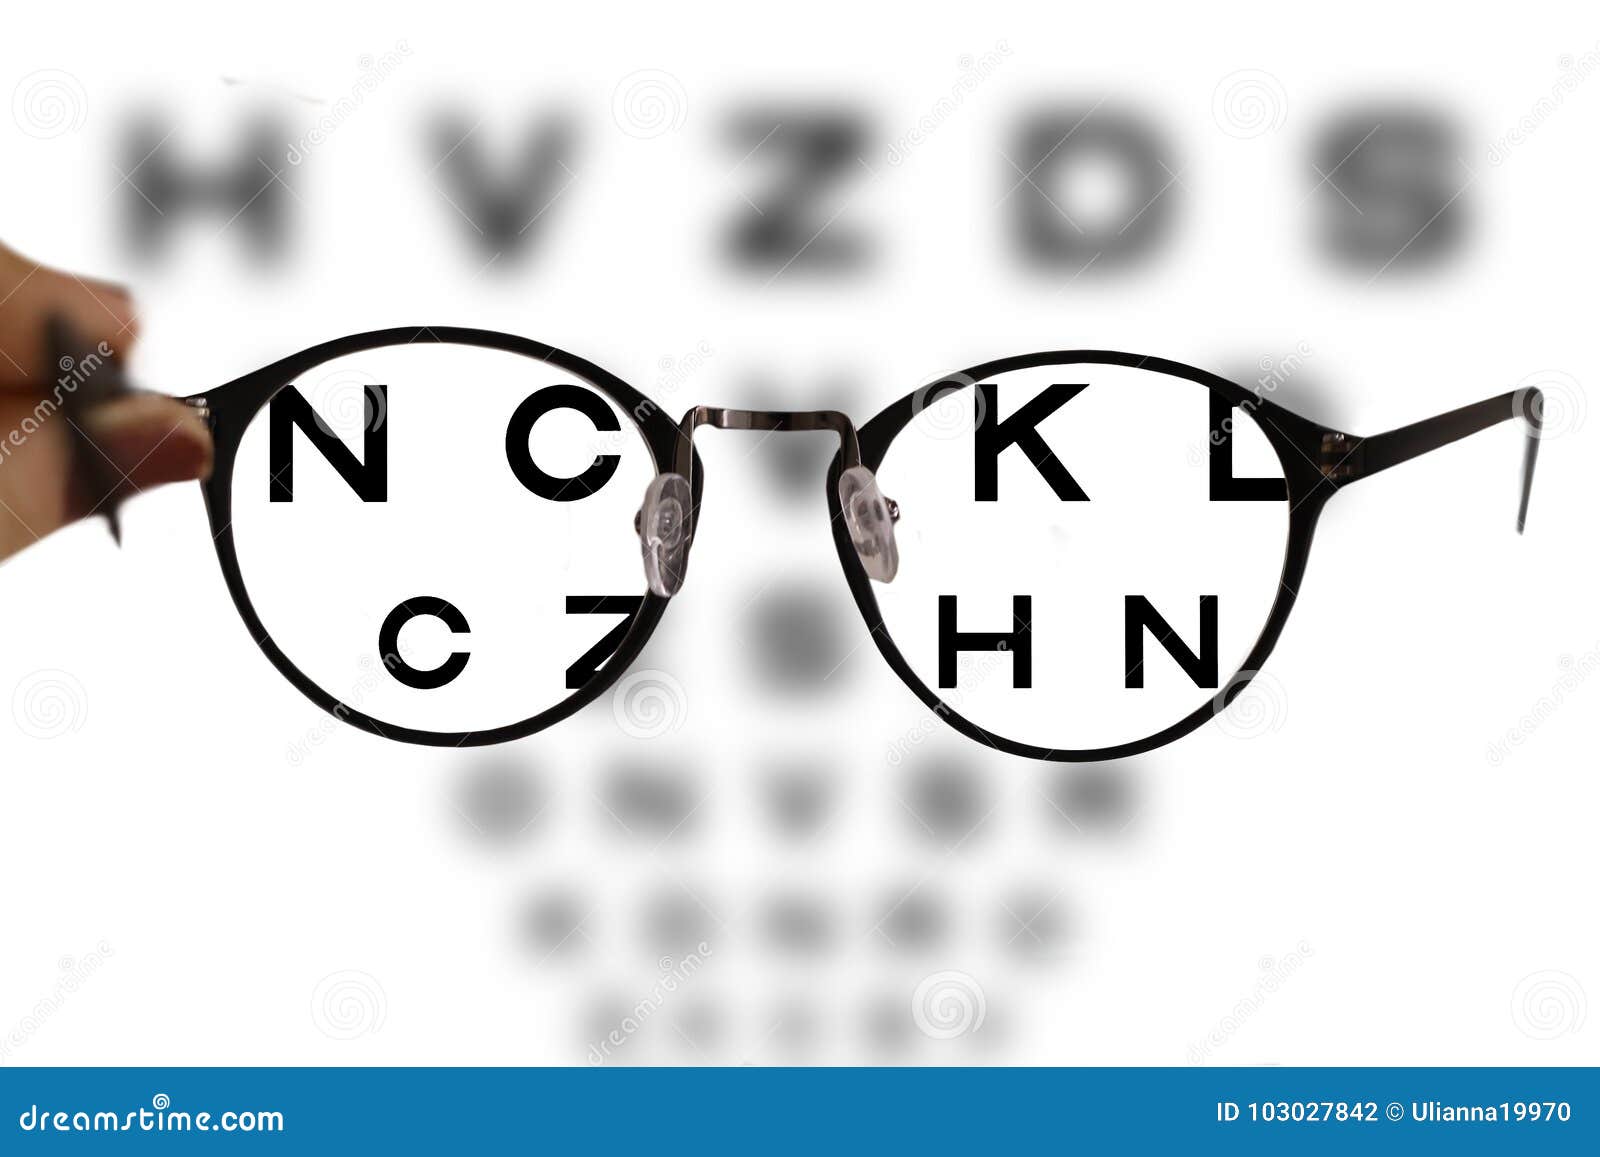 myopia correction glasses on the eye chart letters